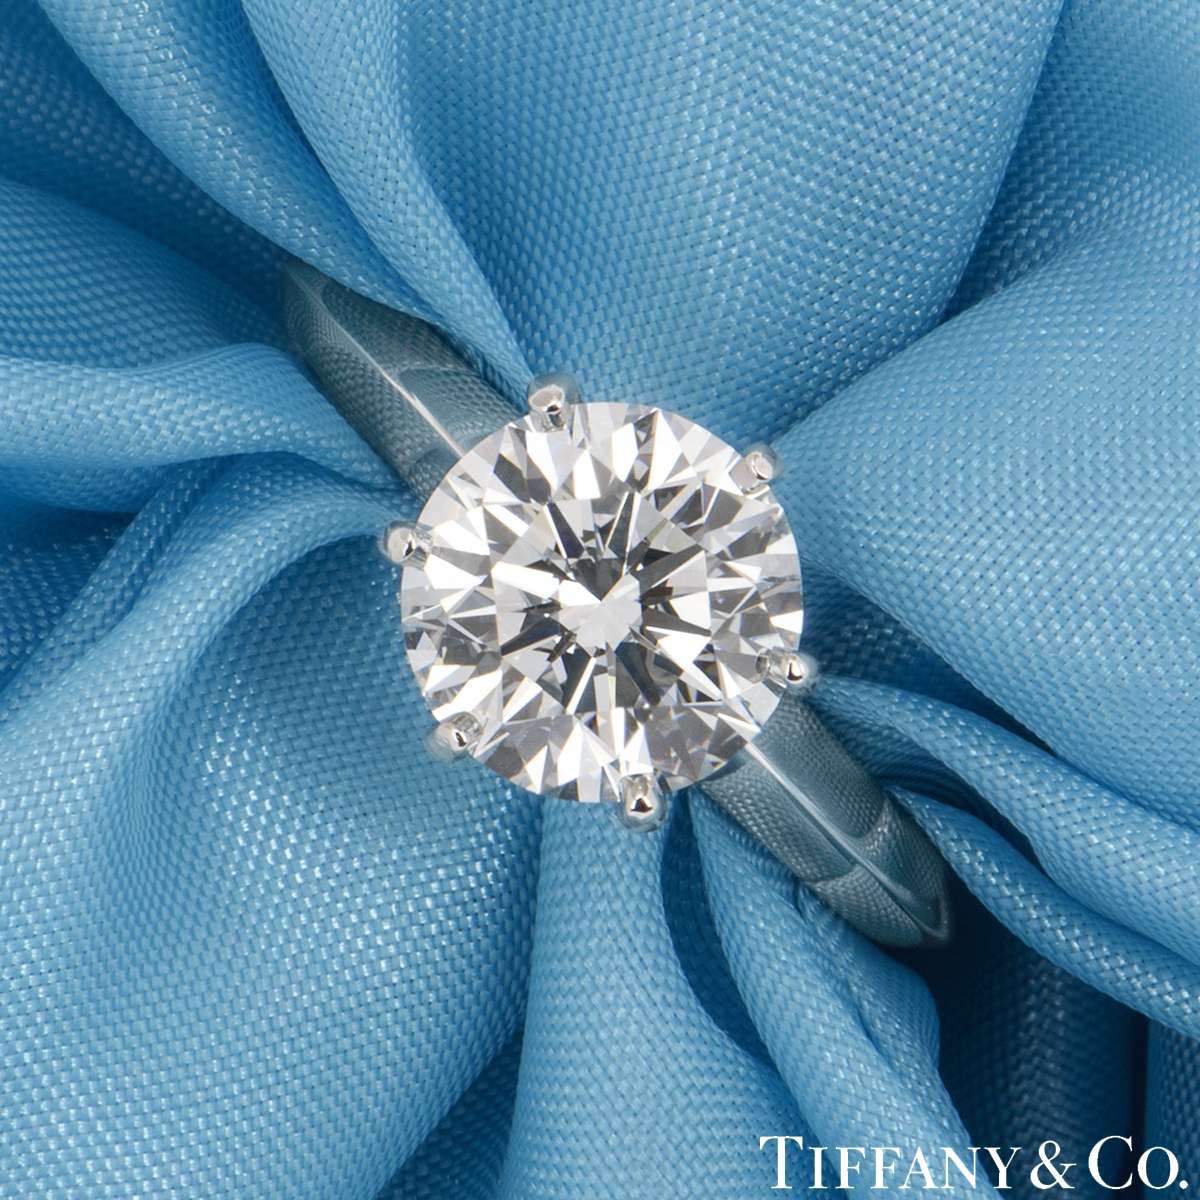 Tiffany & Co. Platinum Diamond Setting Ring 2.02ct D/VS1